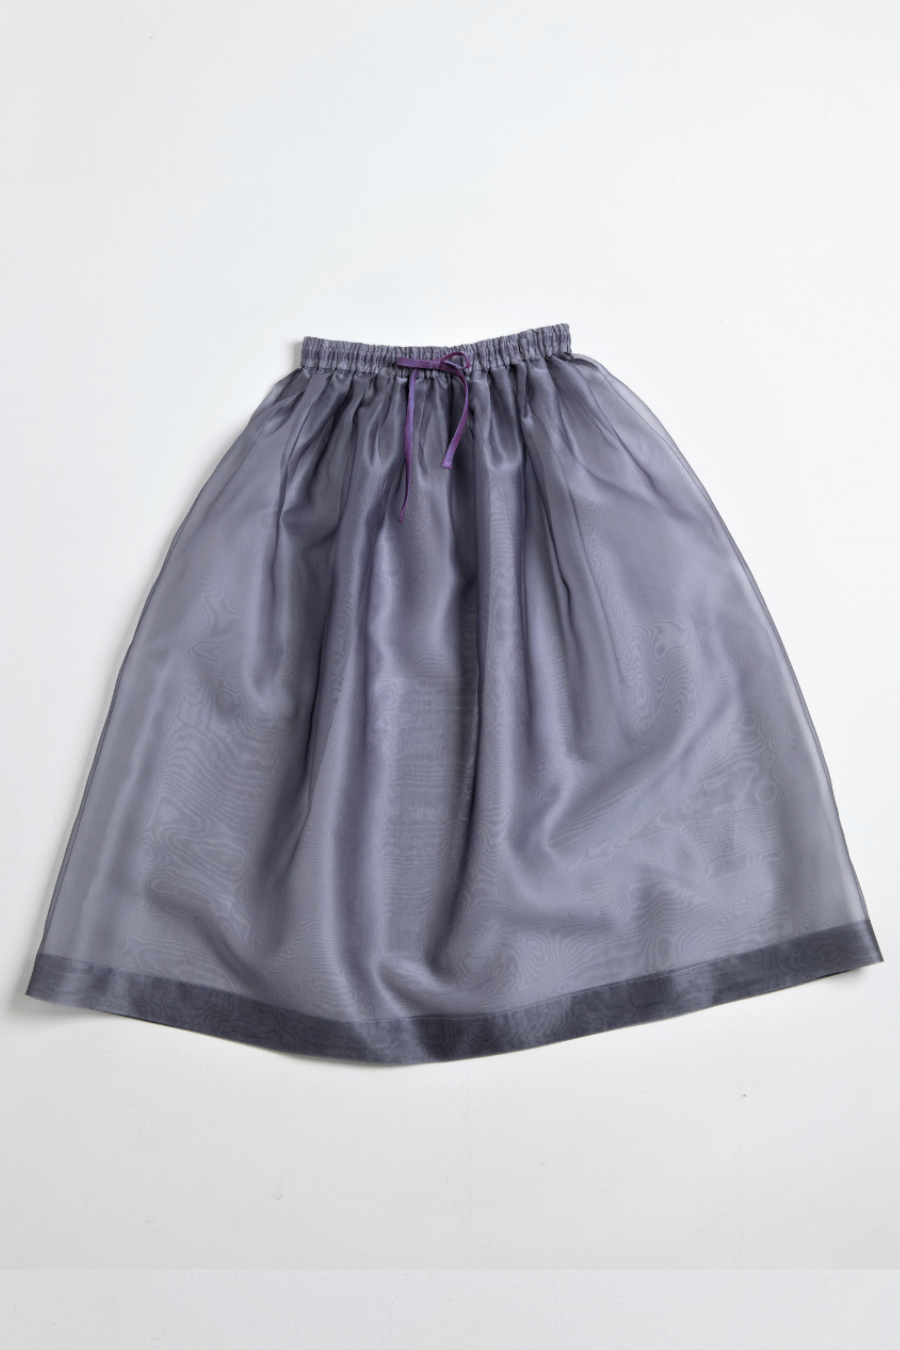 Transparency Drawstring Skirt (Silk Organza)